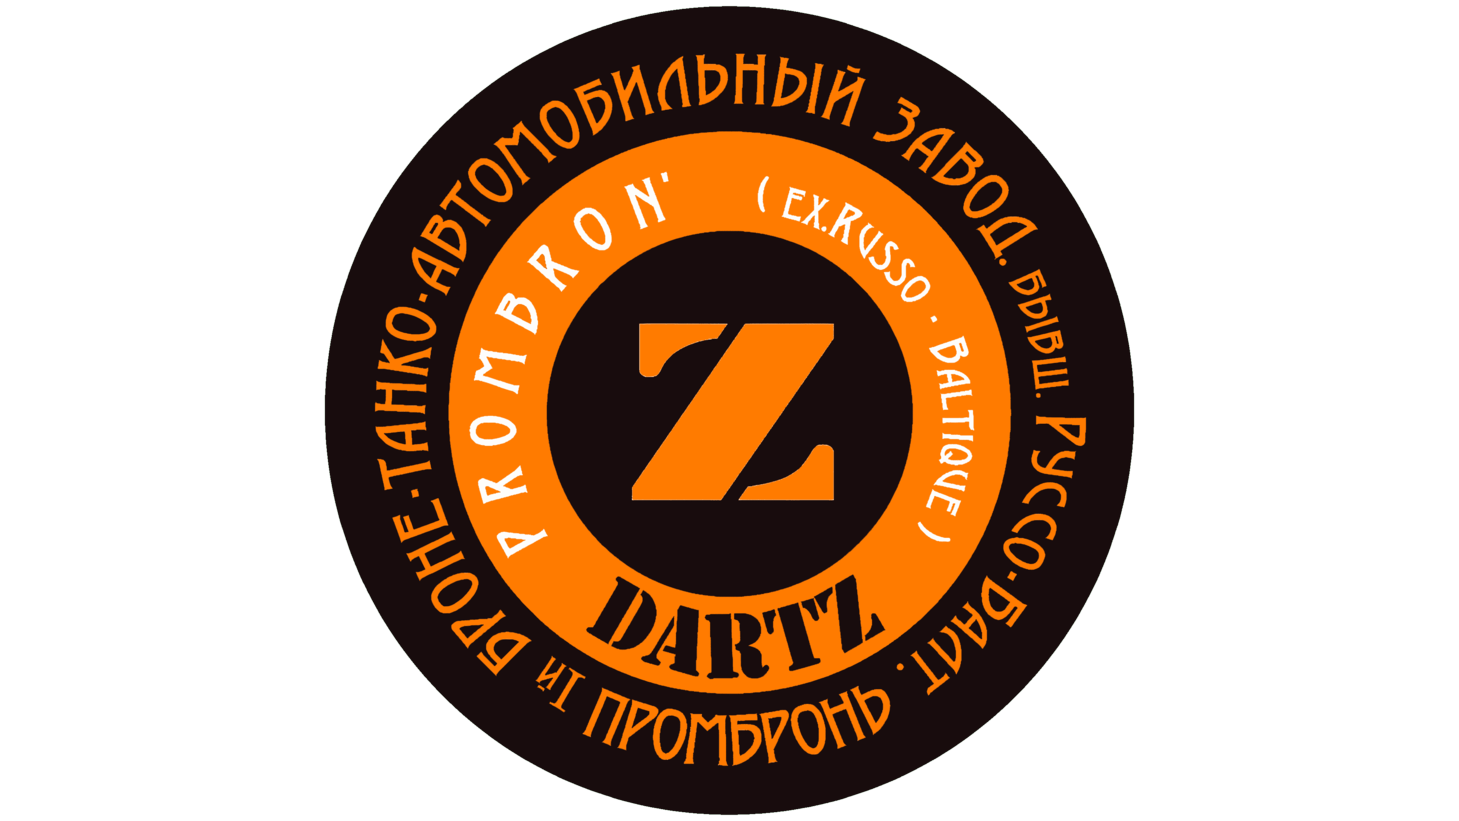 Dartz sign